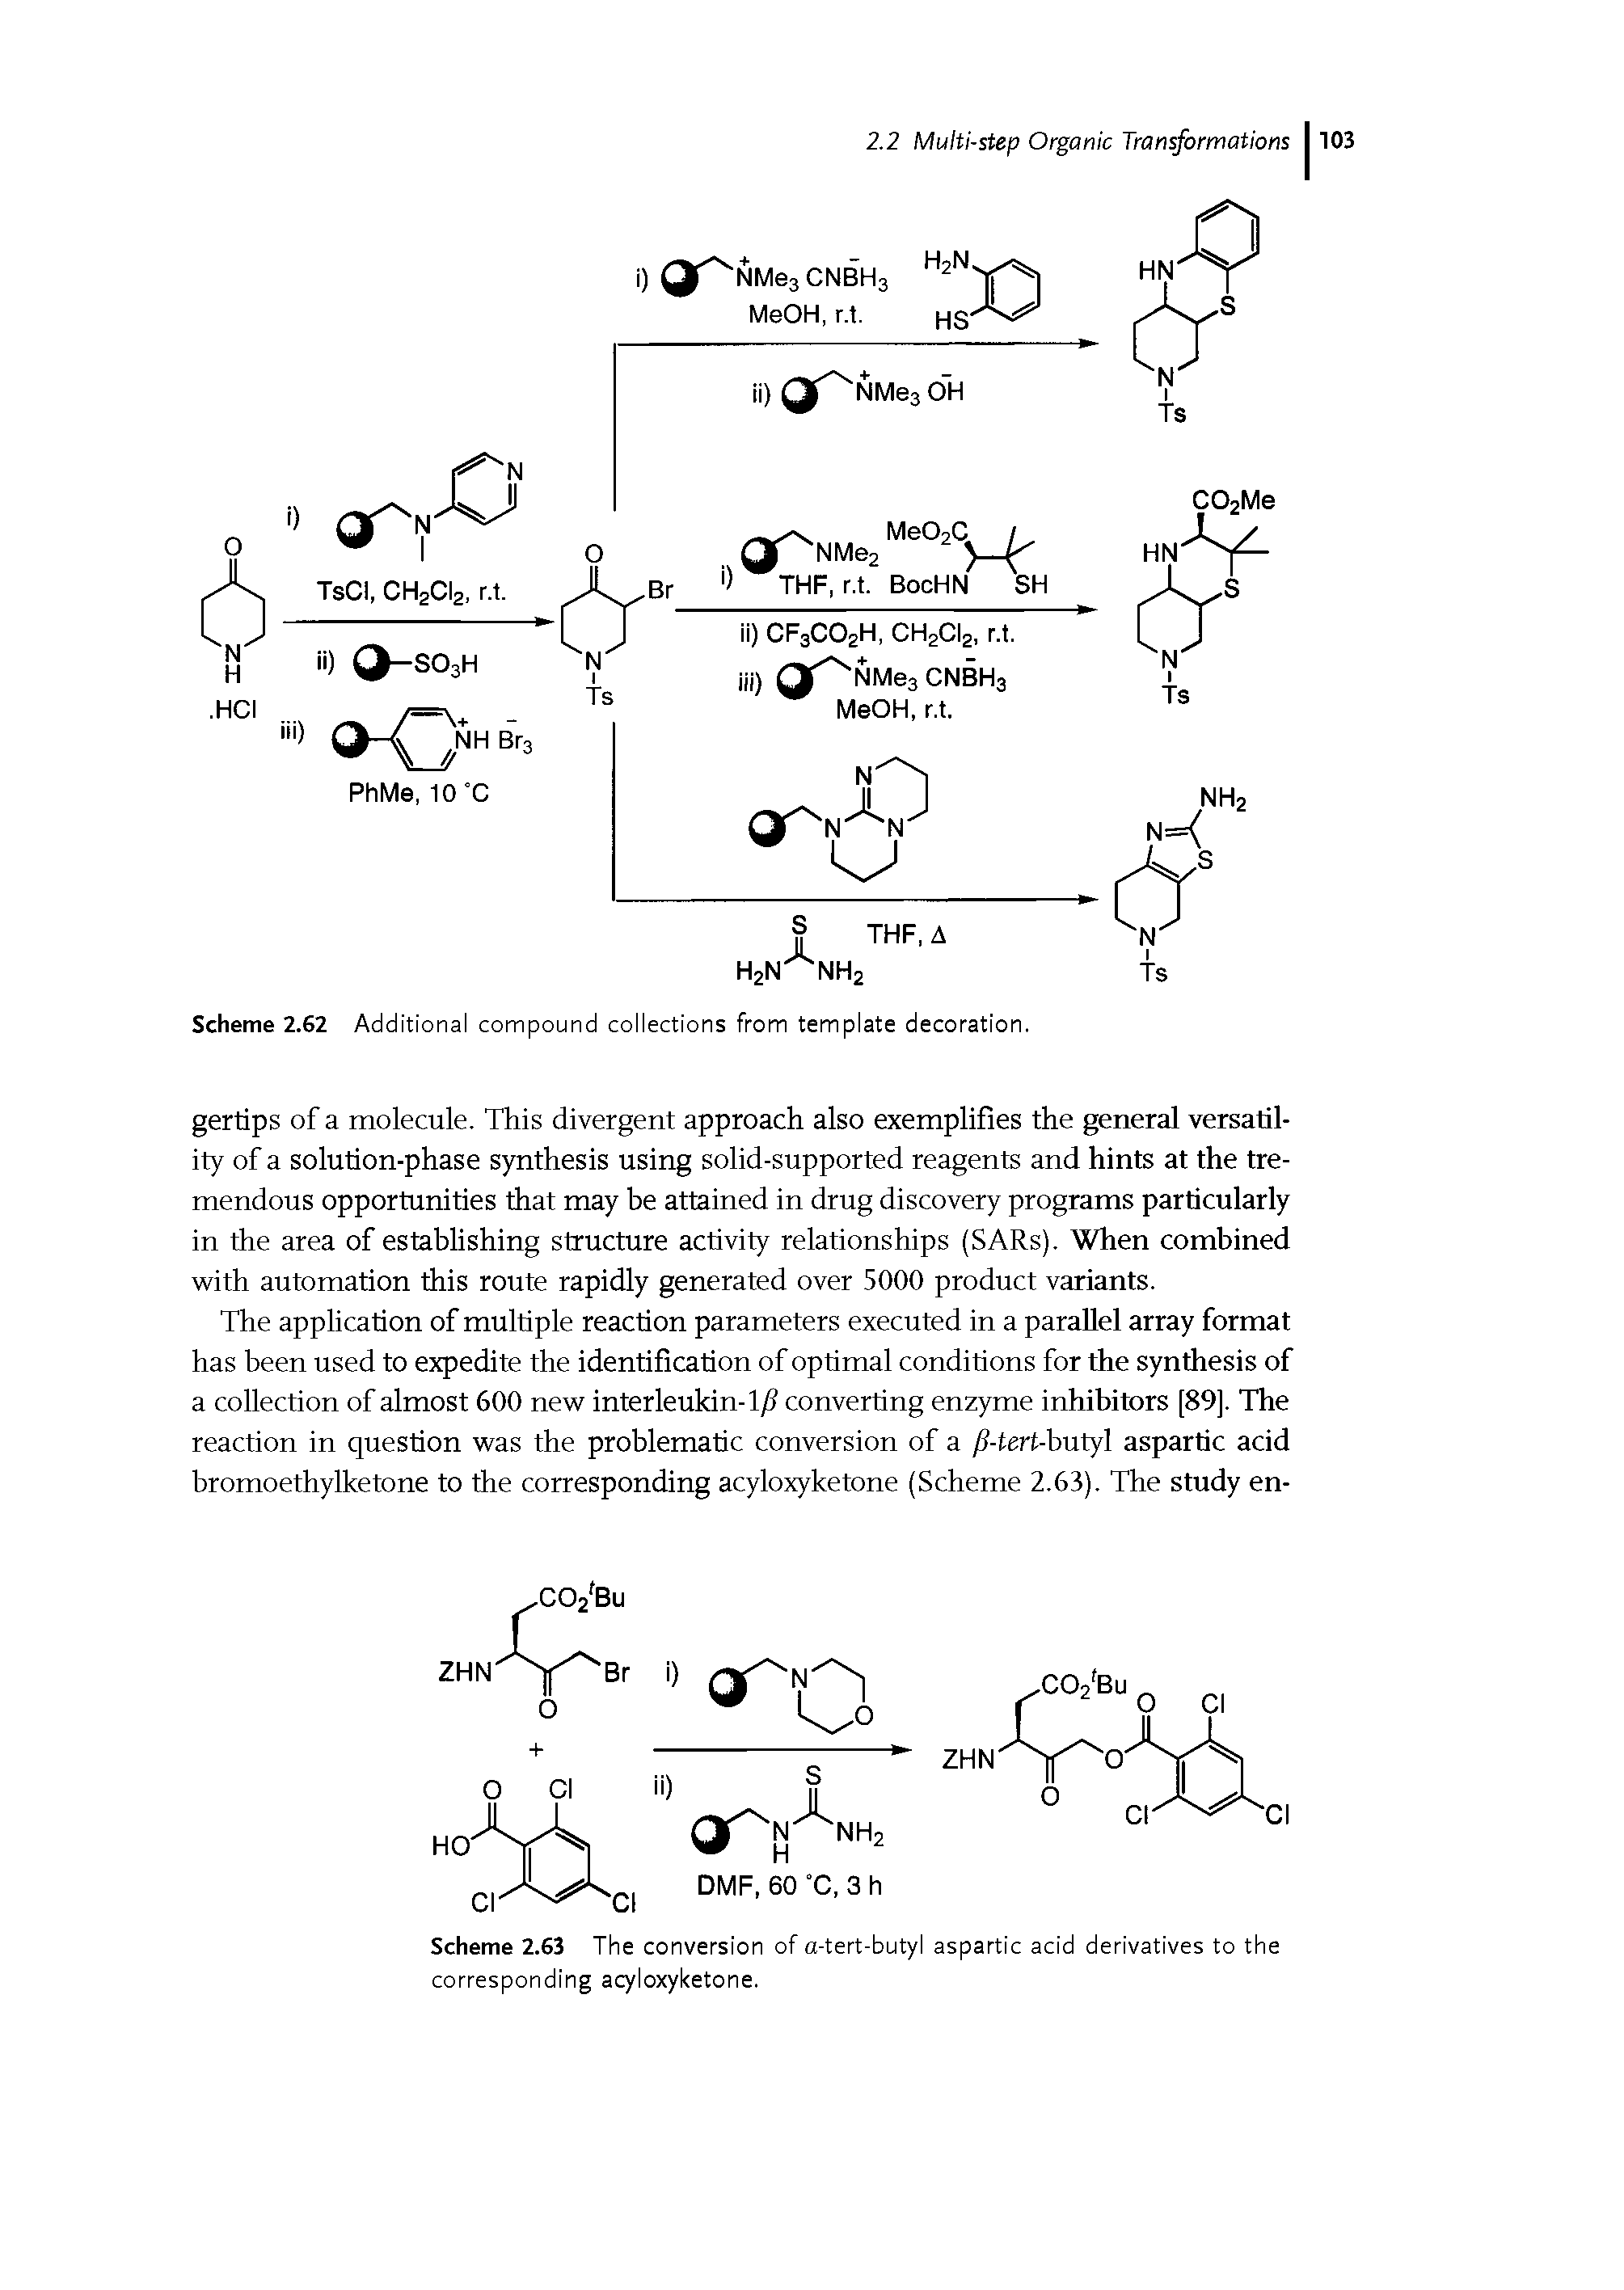 Scheme 2.63 The conversion of a-tert-butyl aspartic acid derivatives to the corresponding acyloxyketone.